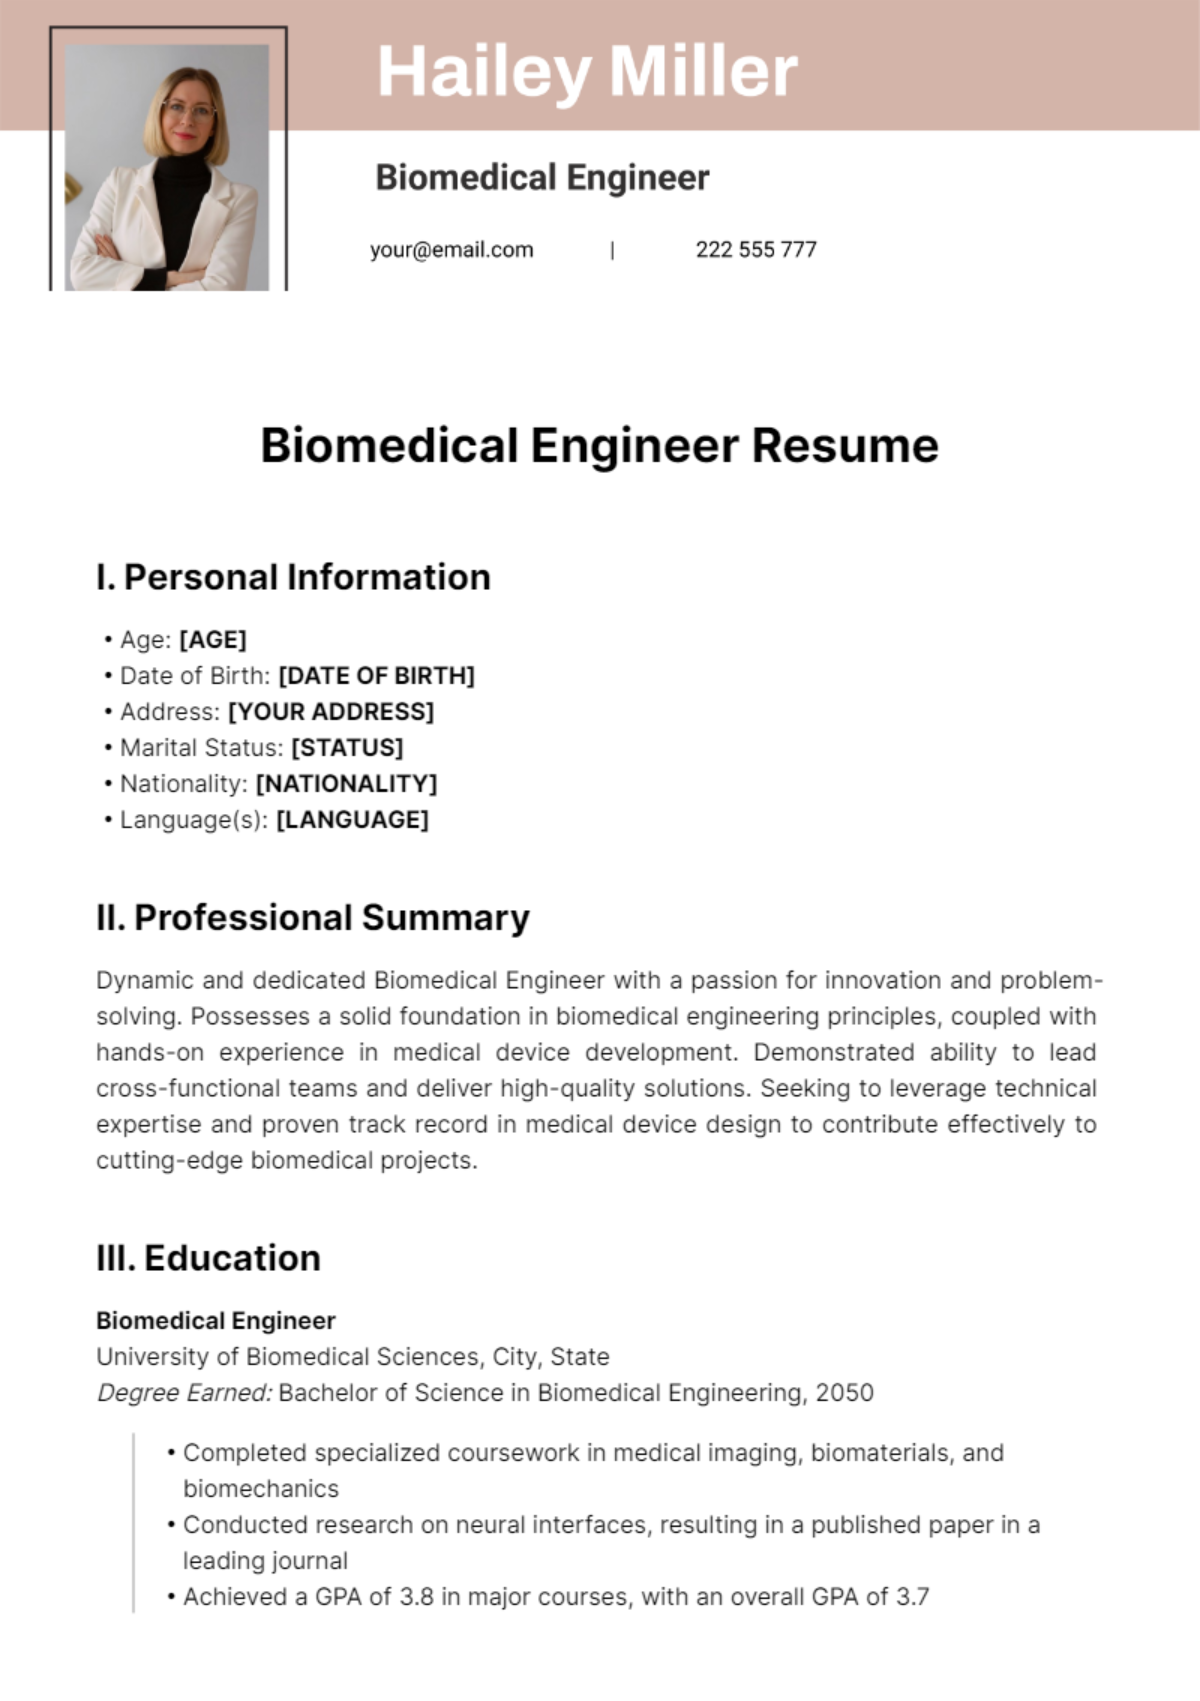 Biomedical Engineer Resume Template